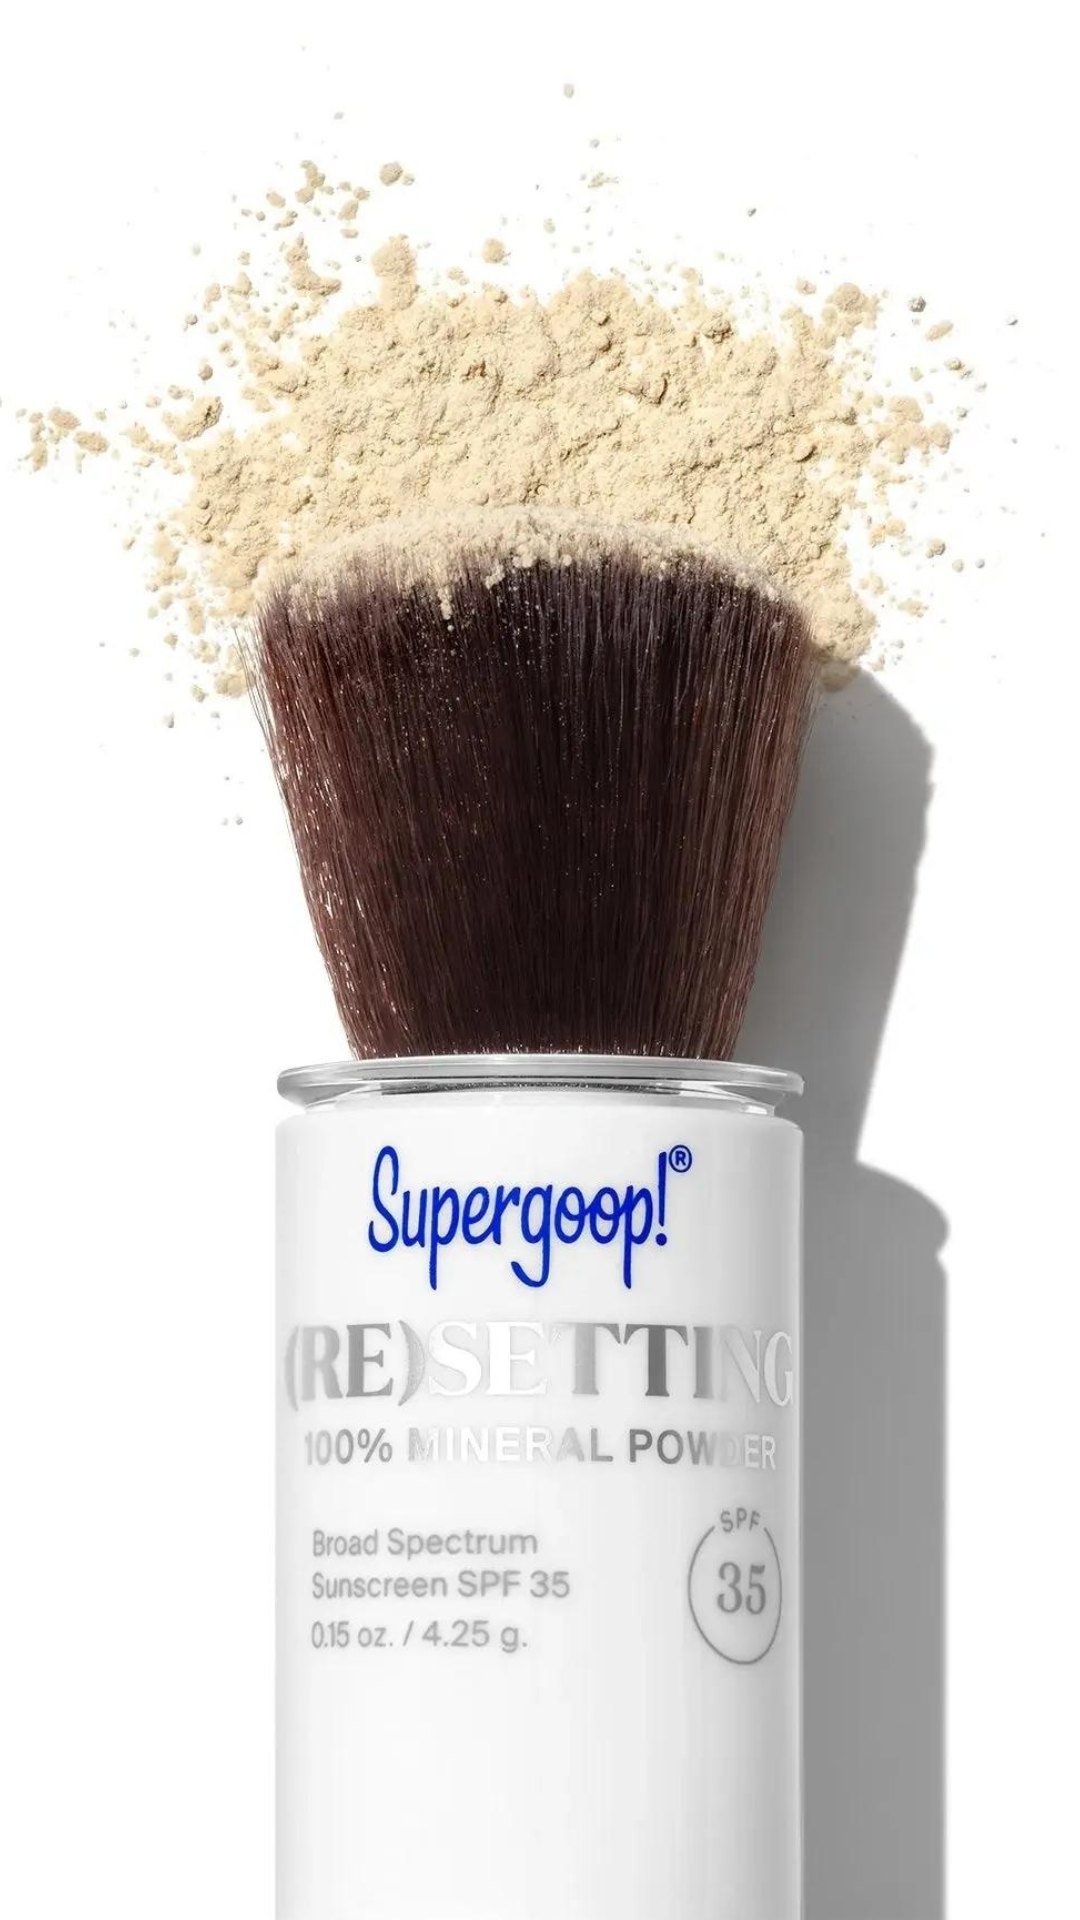 Supergoop (re)setting 100% Mineral Powder